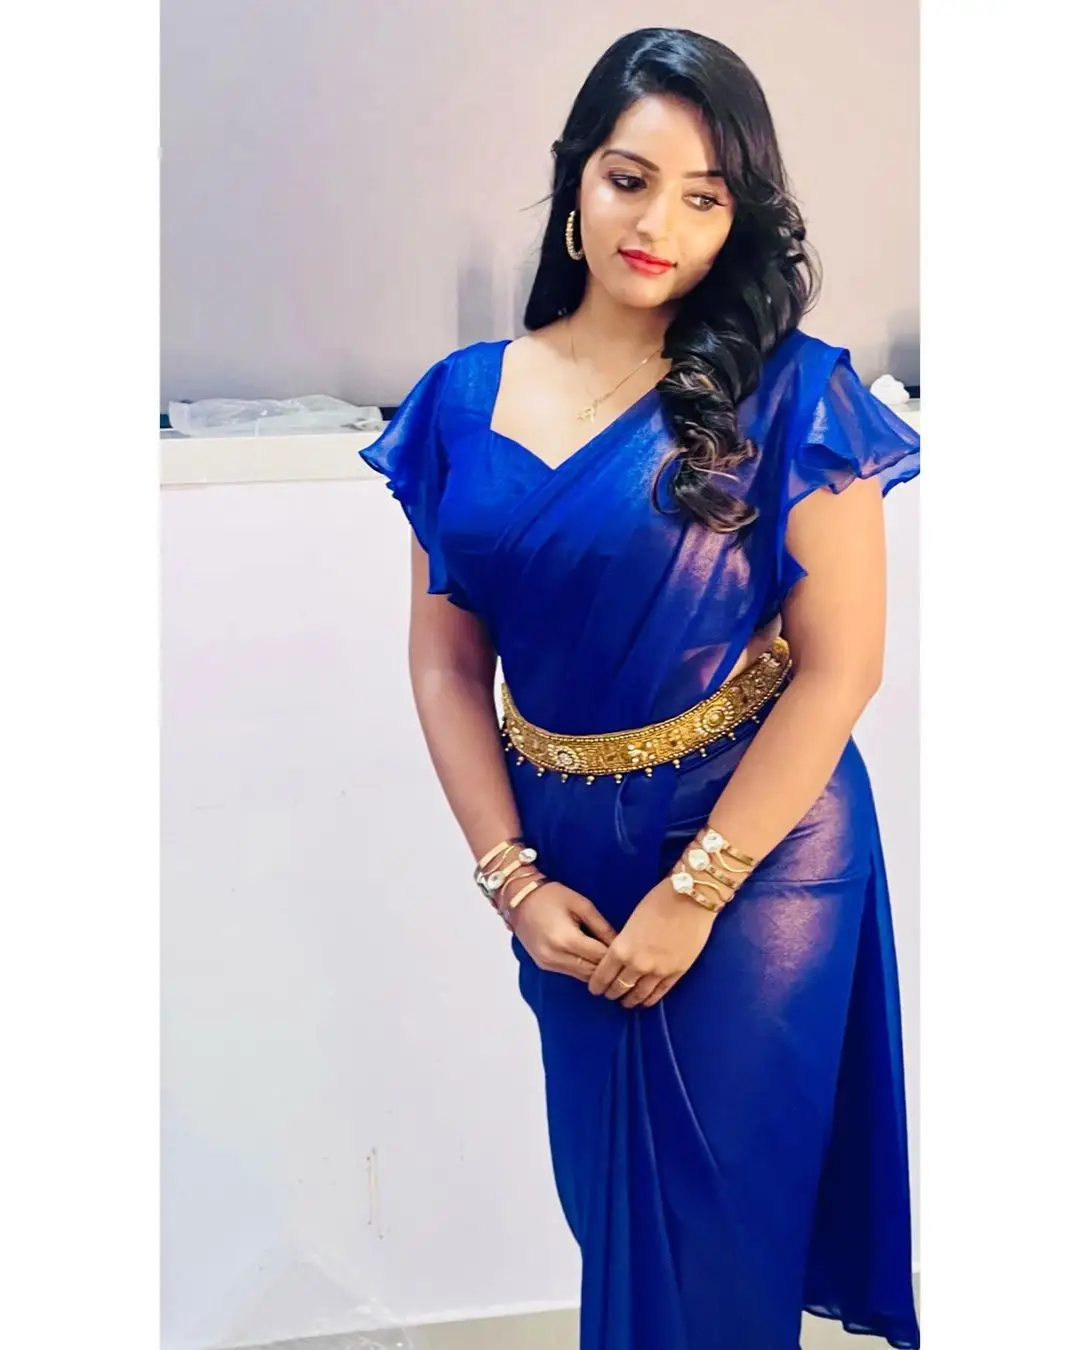 INDIAN GIRL MALAVIKA MENON IN BLUE SAREE BLOUSE 3